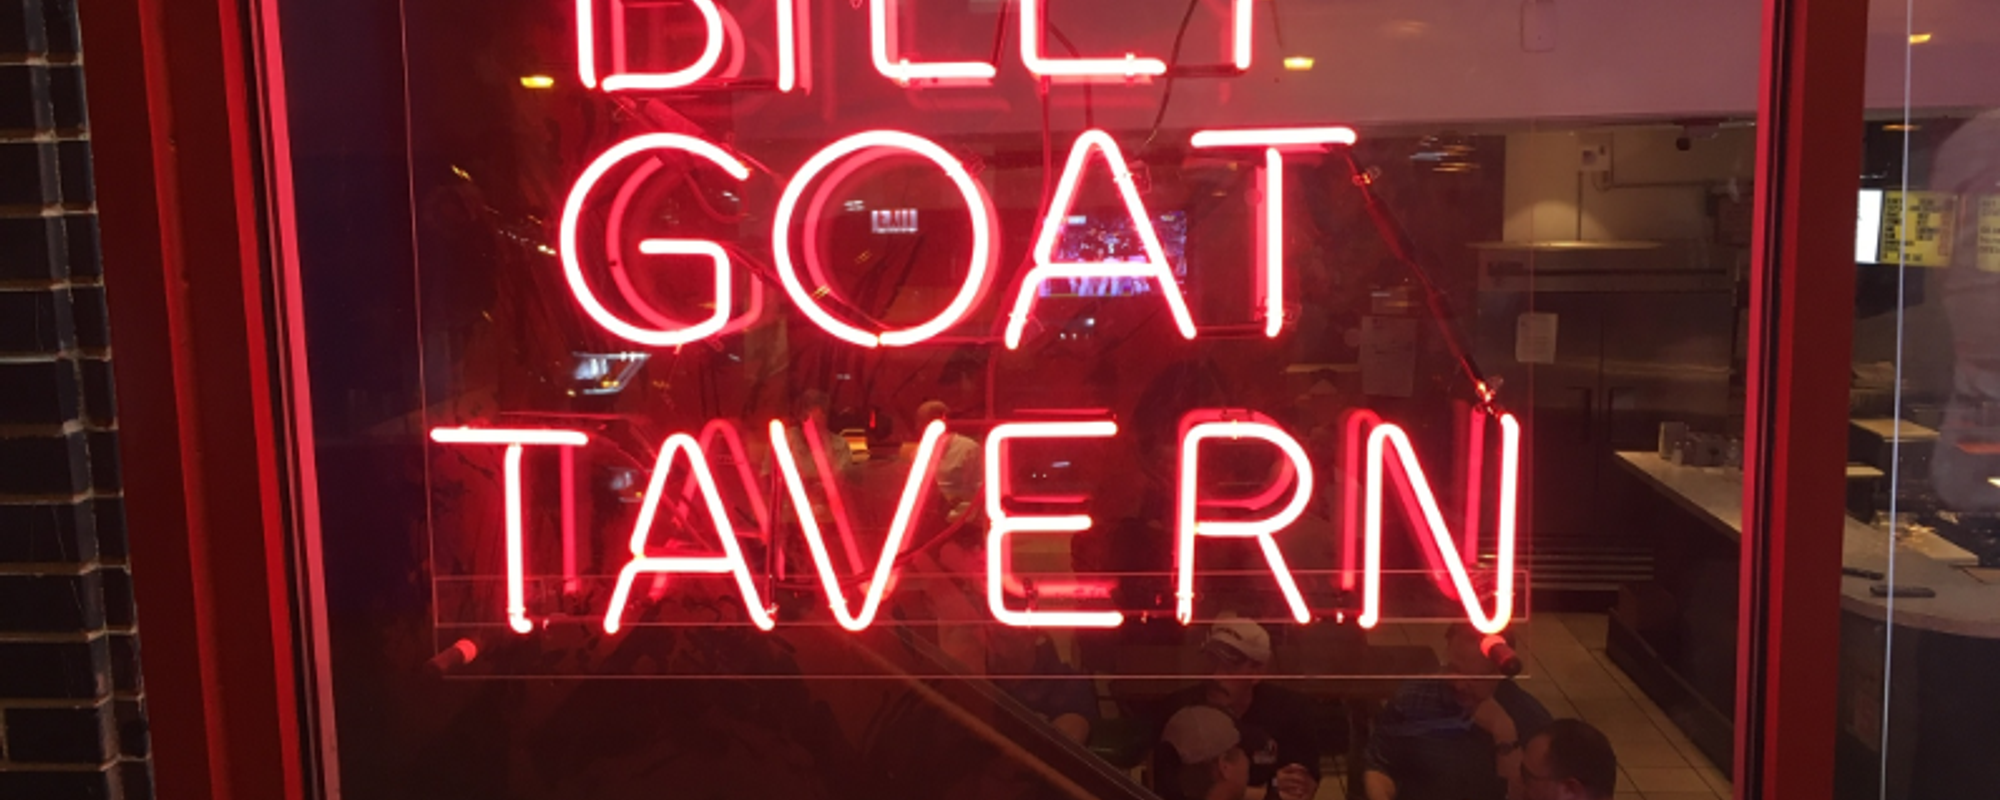 The Billy Goat Tavern - Chicago, Illinois